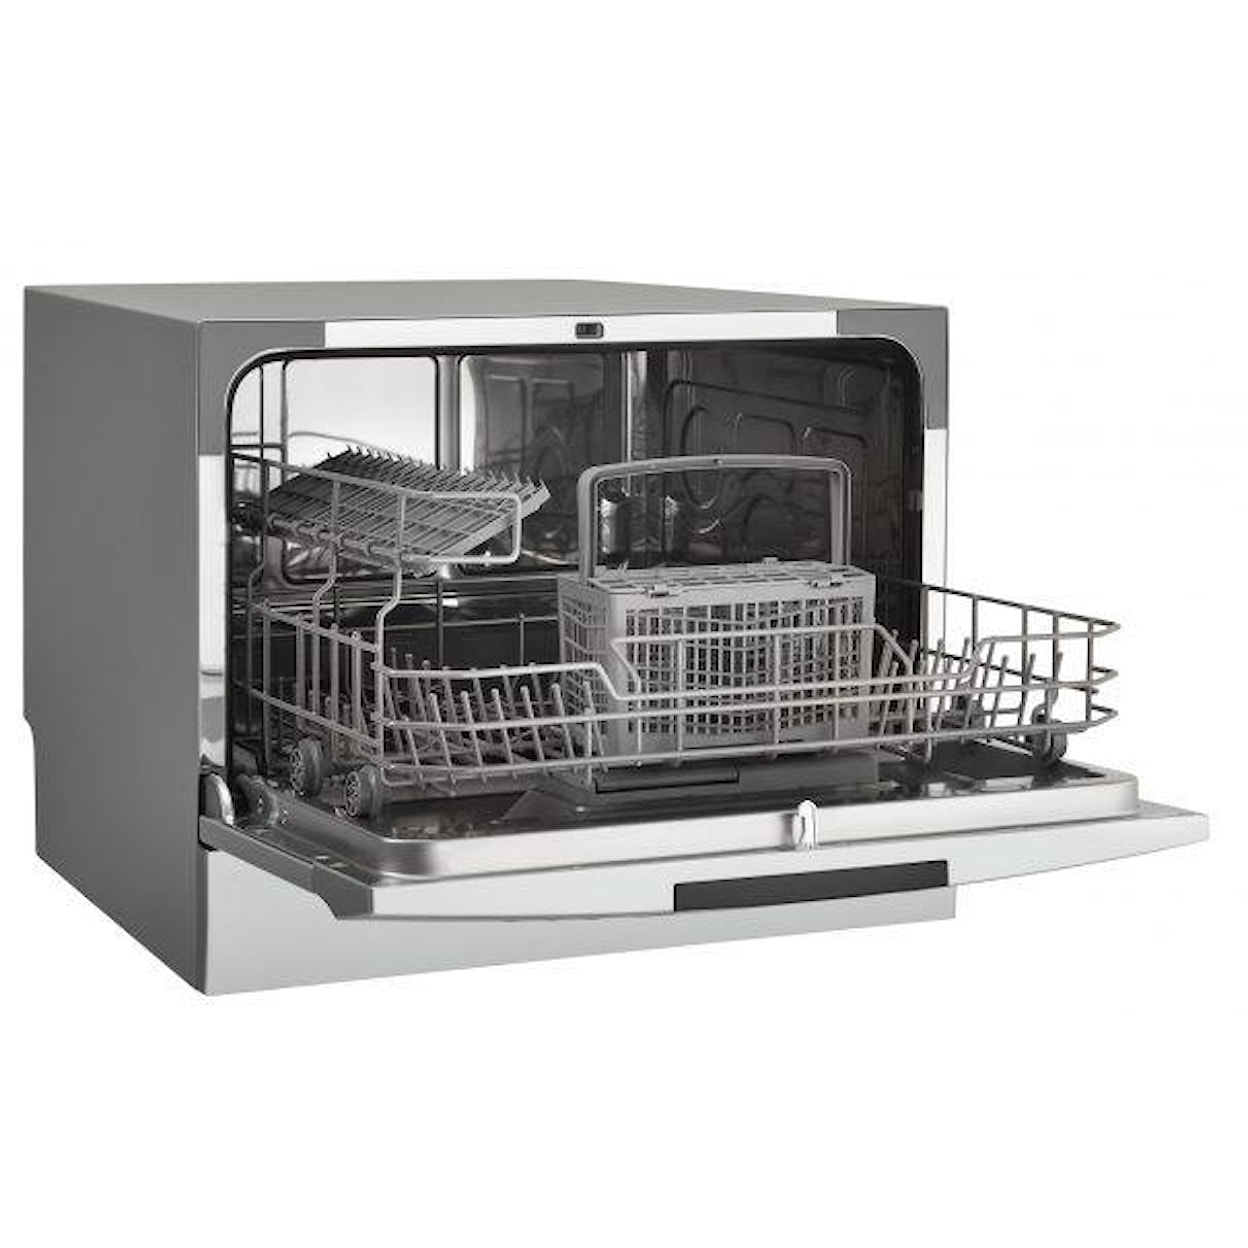 Danby Dishwashers Built In Dishwasher